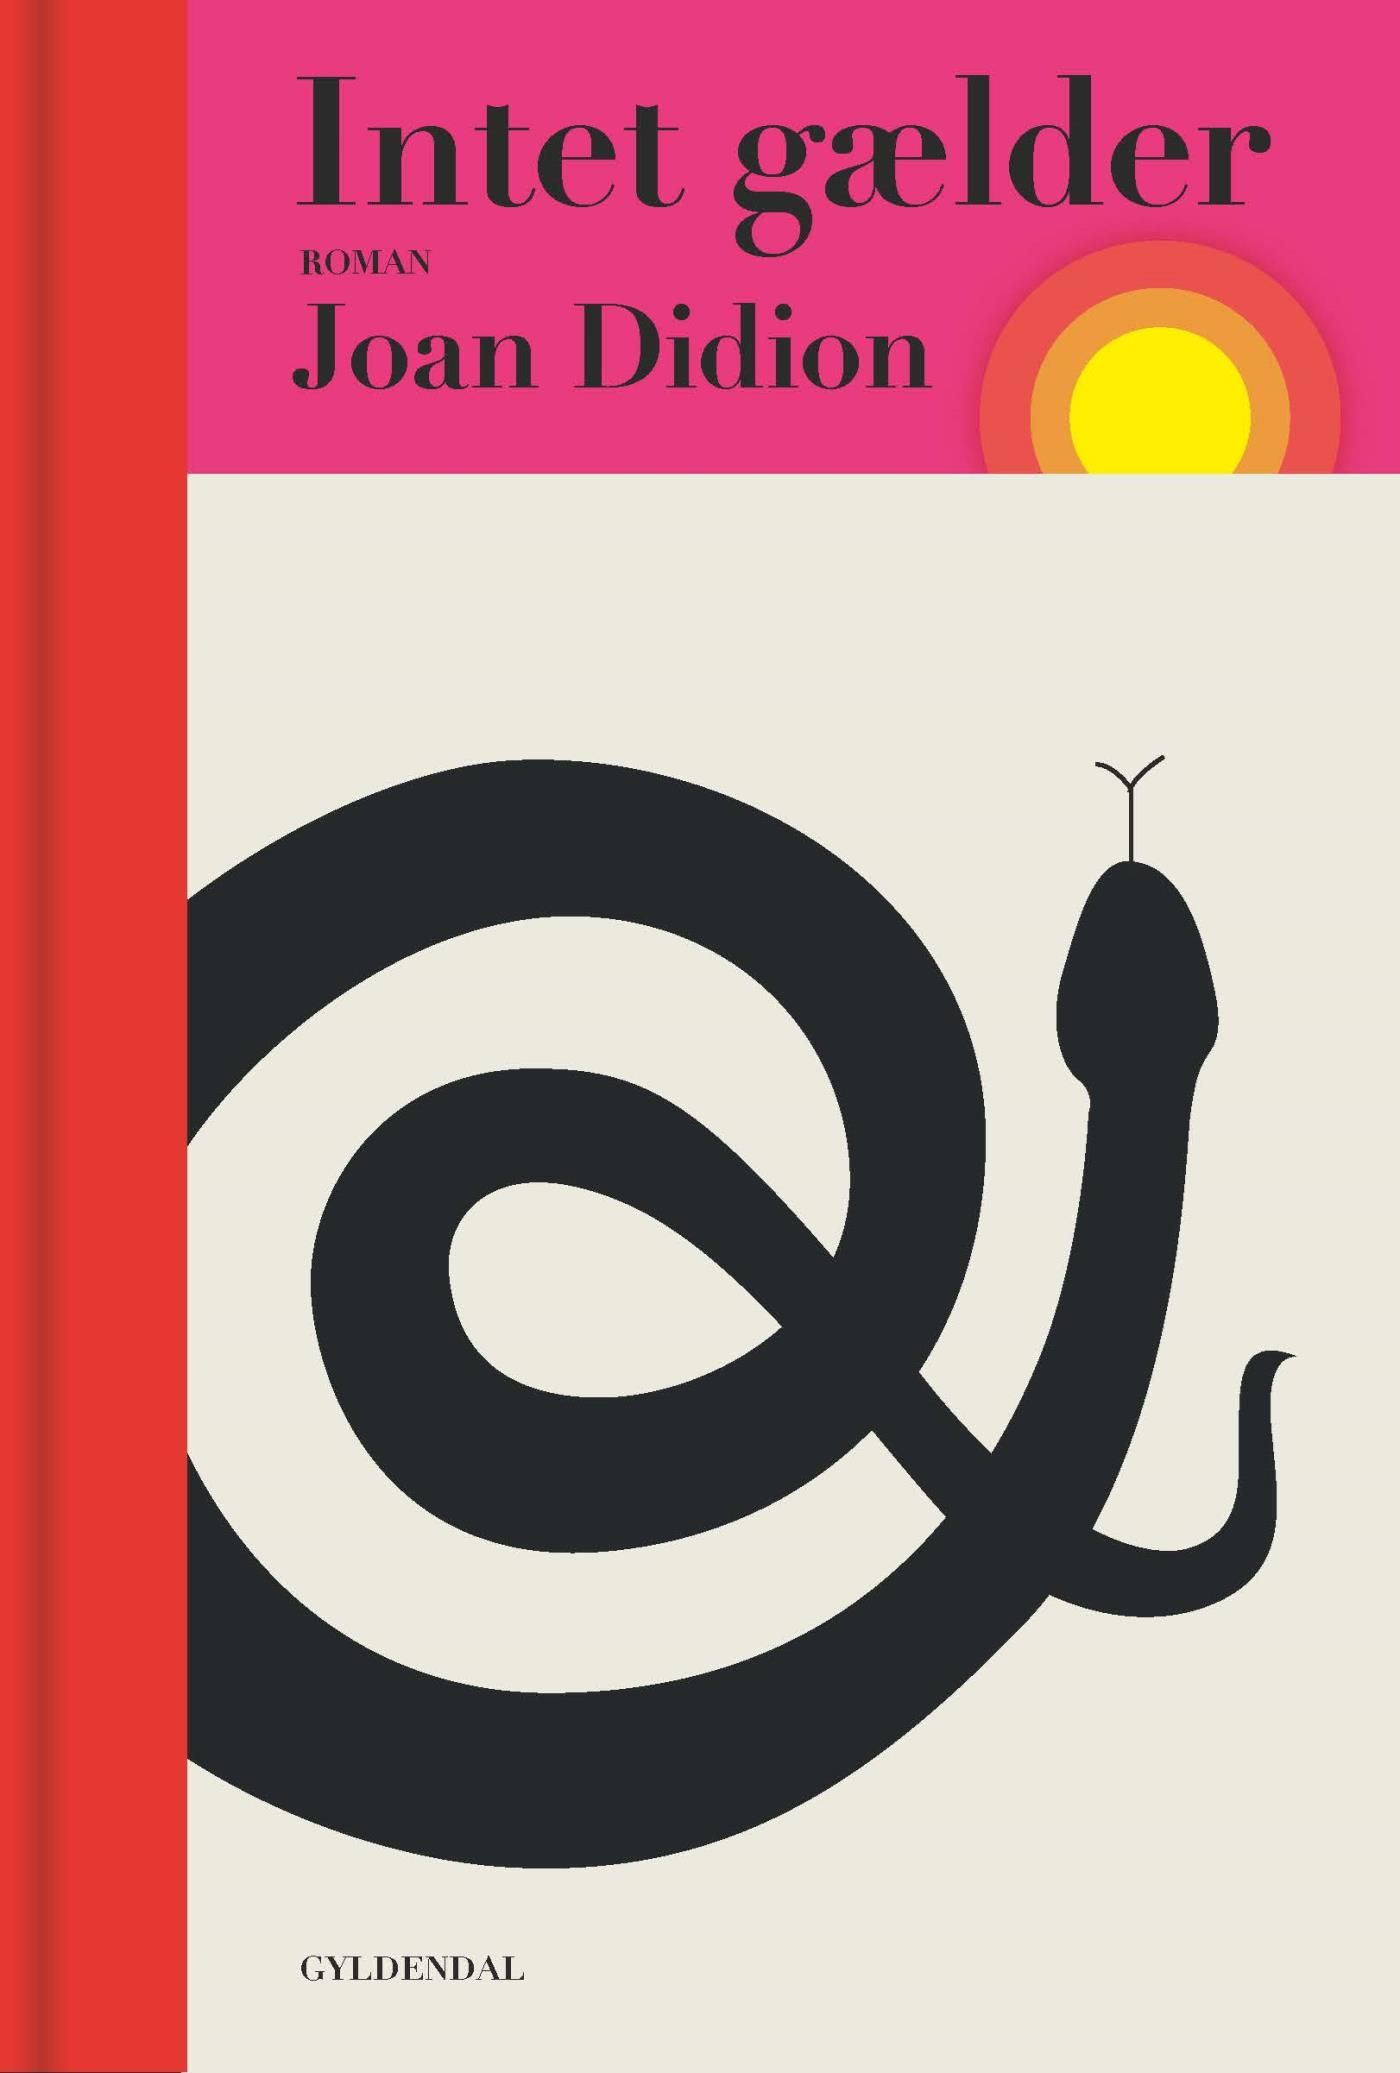 Intet gælder, eBook by Joan Didion